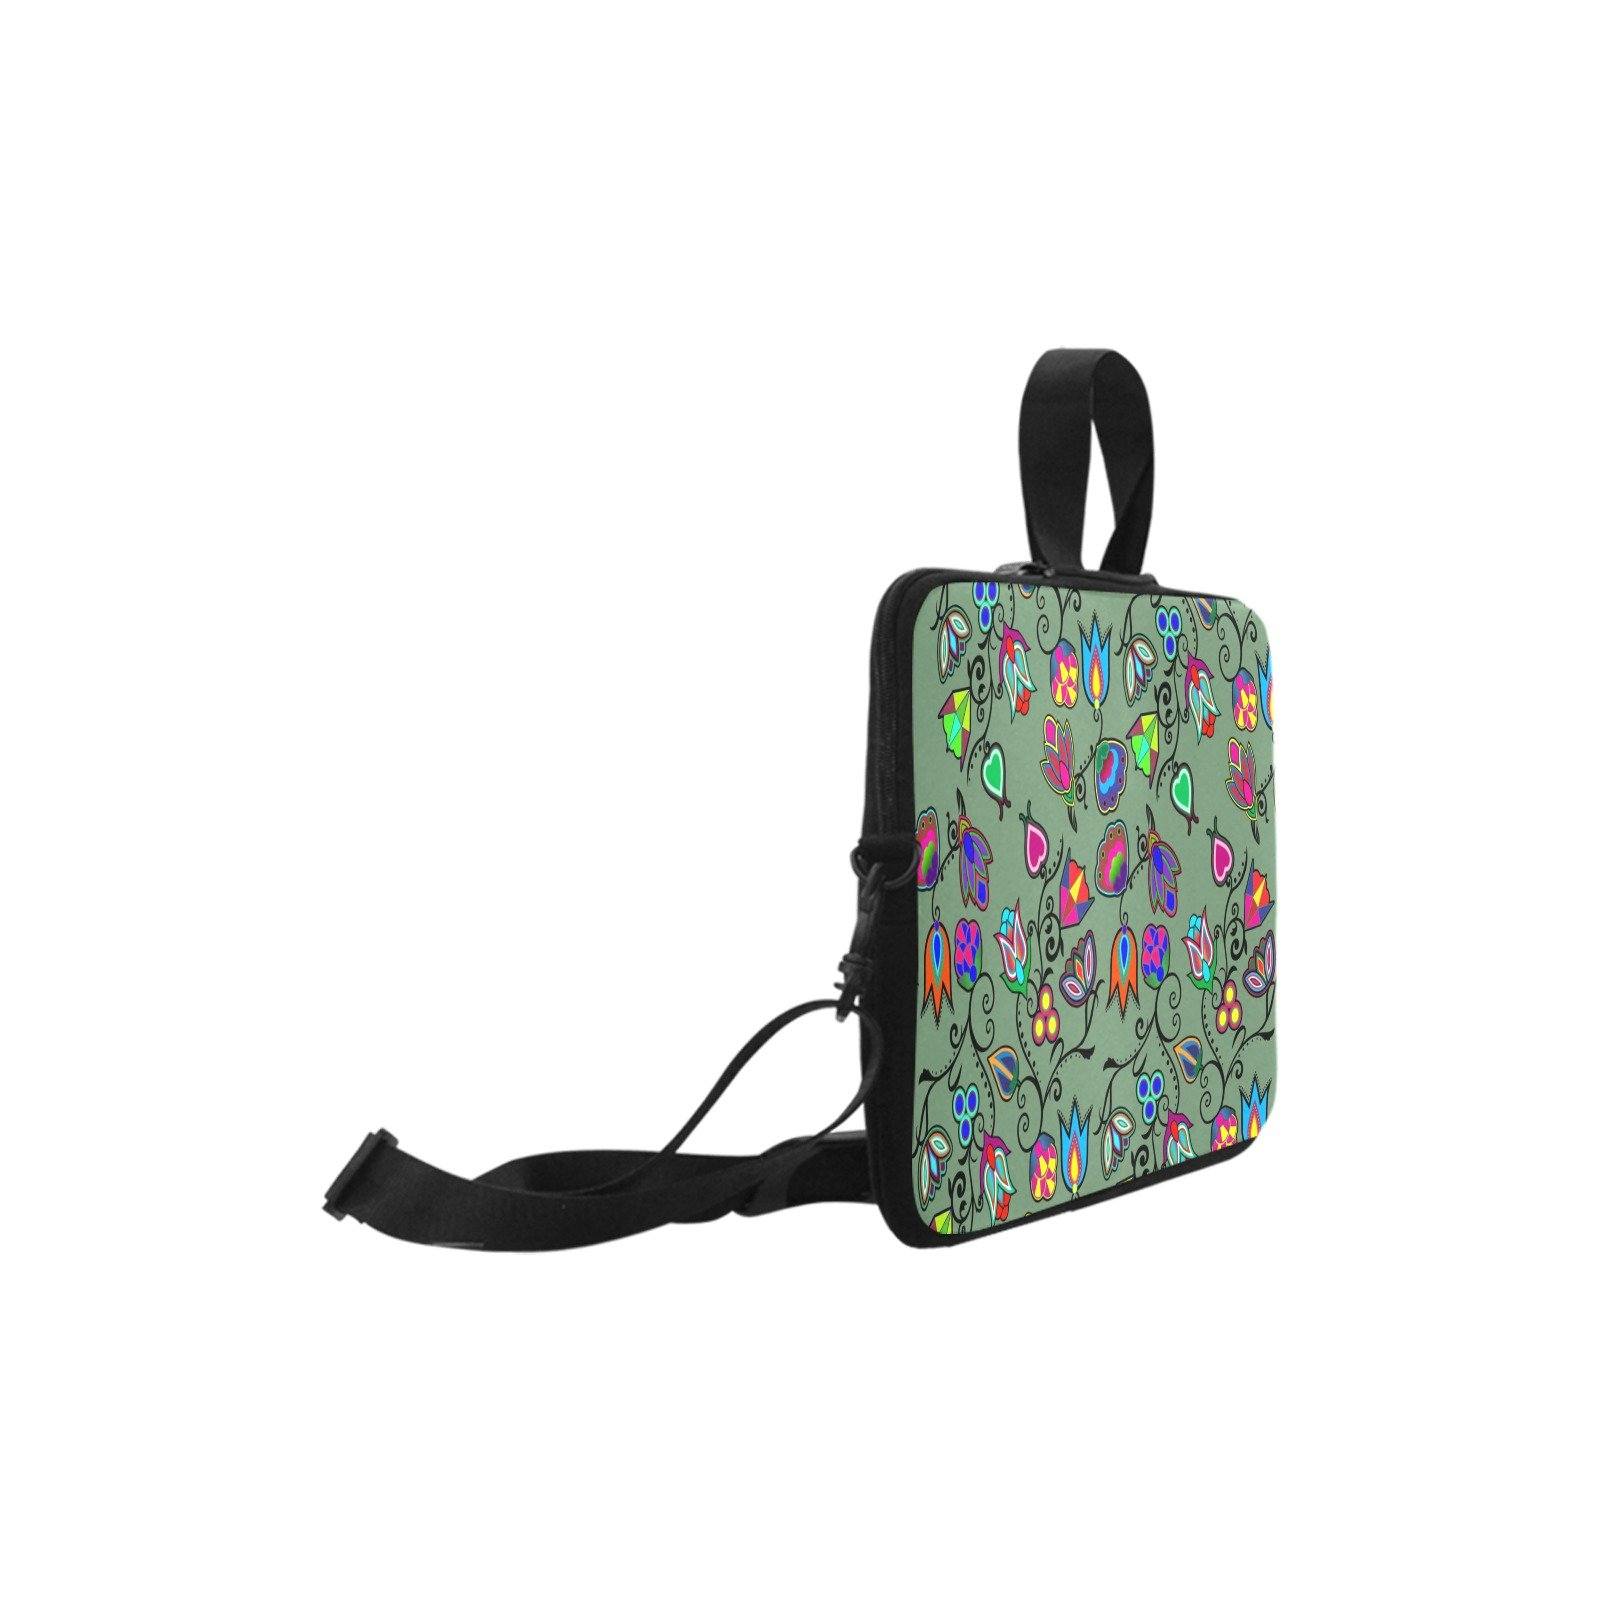 Indigenous Paisley Dark Sea Laptop Handbags 11" bag e-joyer 